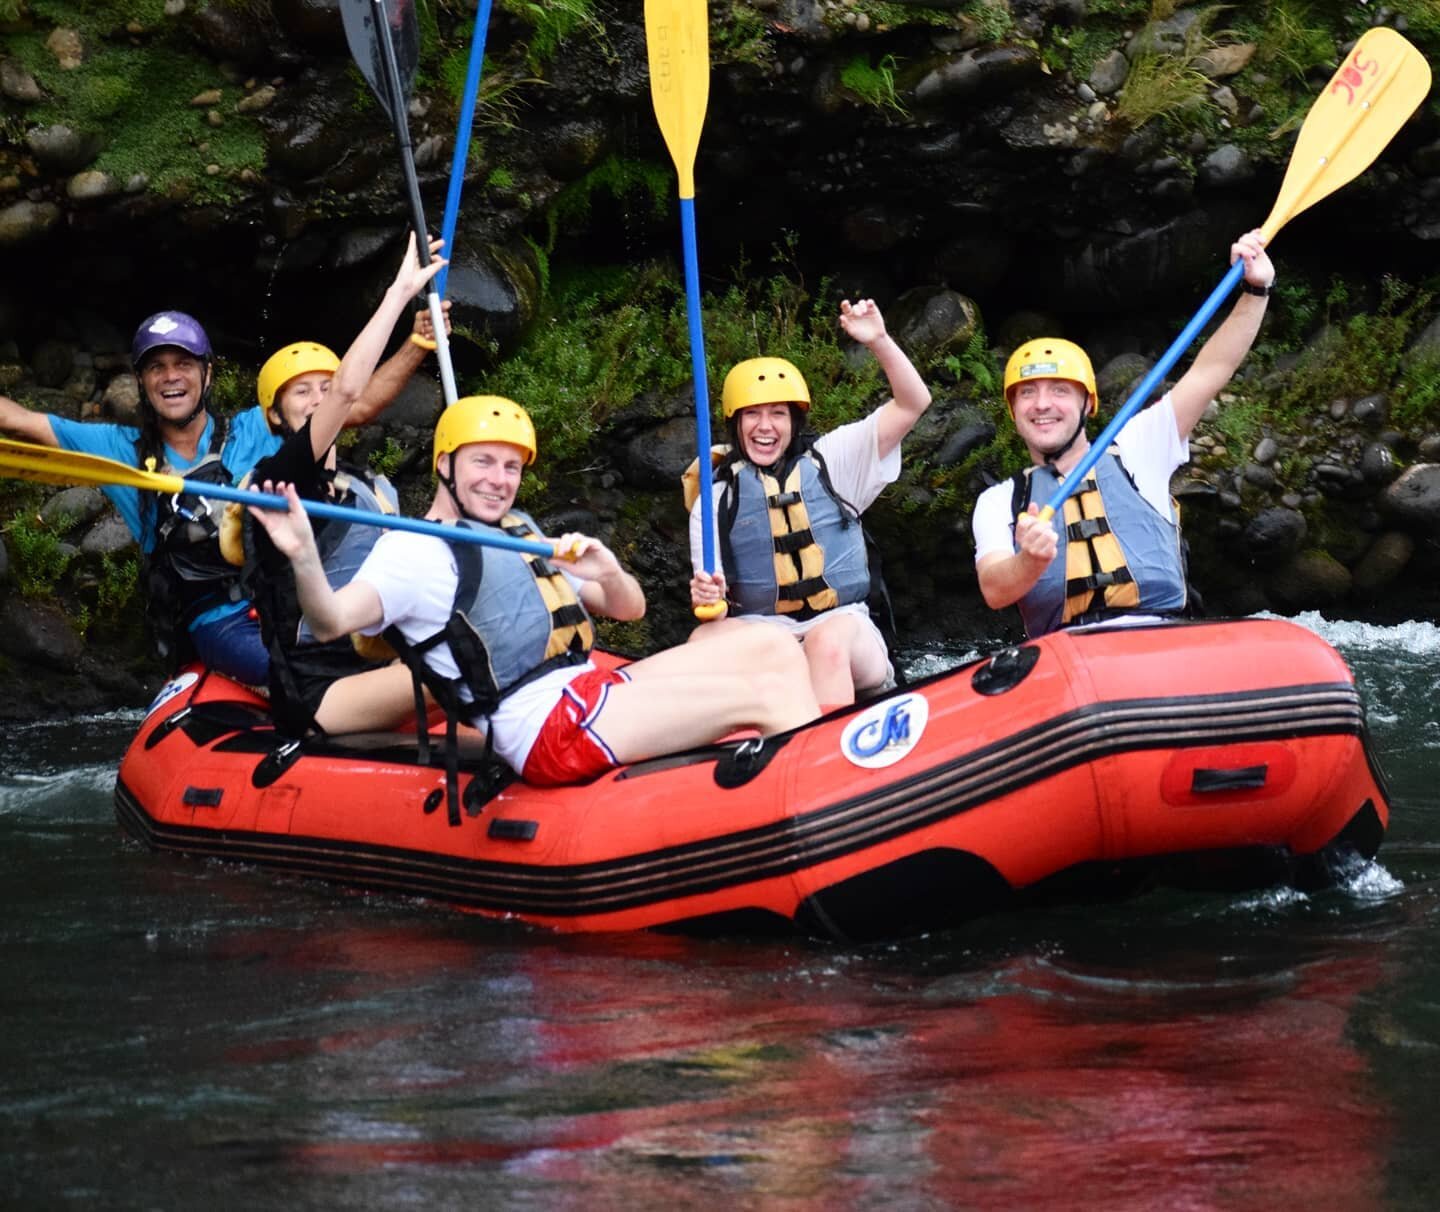 Hands up if you wish you were rafting right now 🙋&zwj;♀️
.
.
.
#whitewaterrafting #rafting #outdoors #nature #costarica #puravida #sarapiquioutdoorcenter #sarapiqui #adventure #outdoorsports #kayak #kayaking #watersports #river #wildlife #rainforest